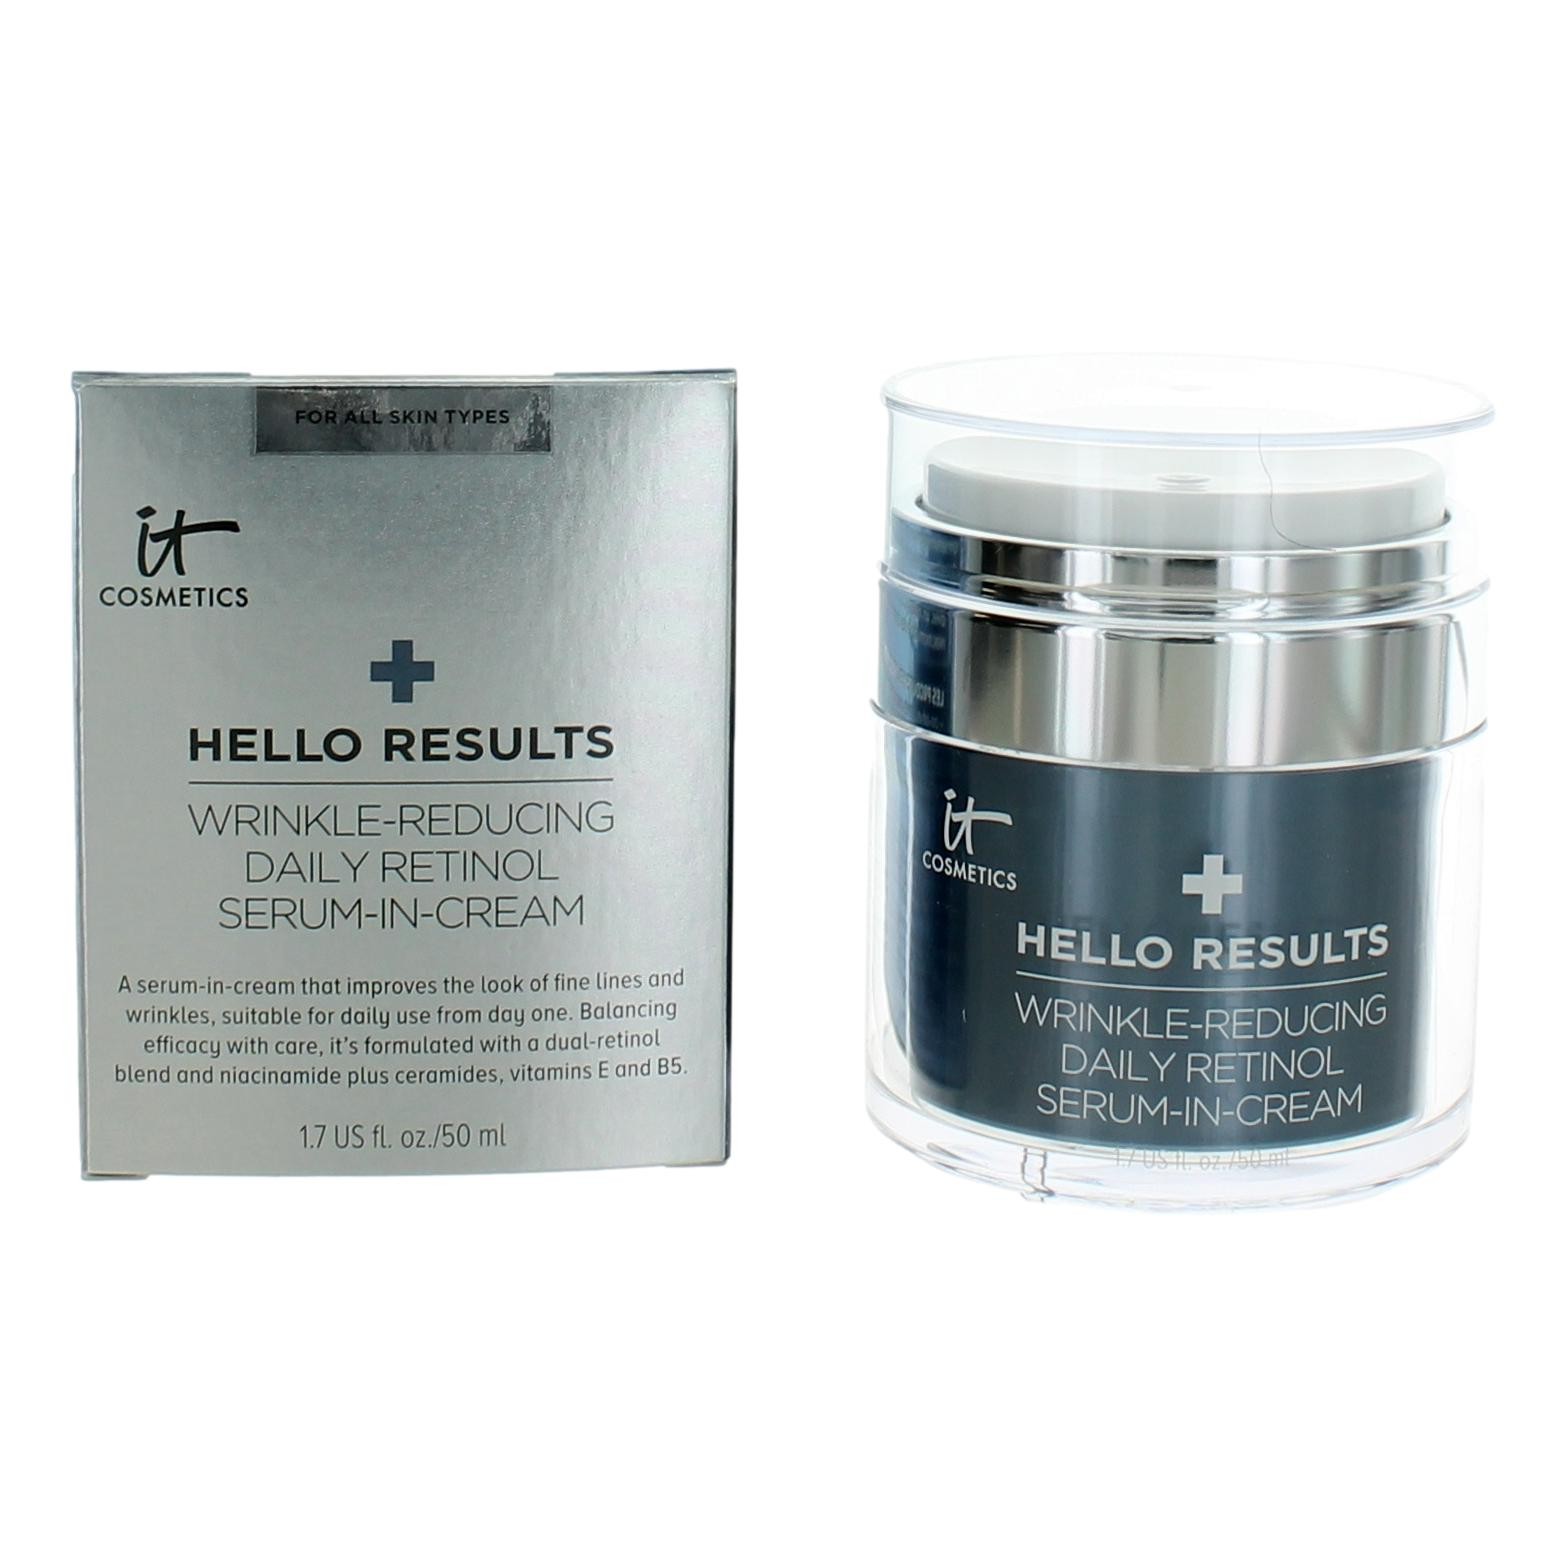 It Cosmetics Hello Results by It Cosmetics 1.7 oz Wrinkle Reducing Daily Retinol Serum in Cream